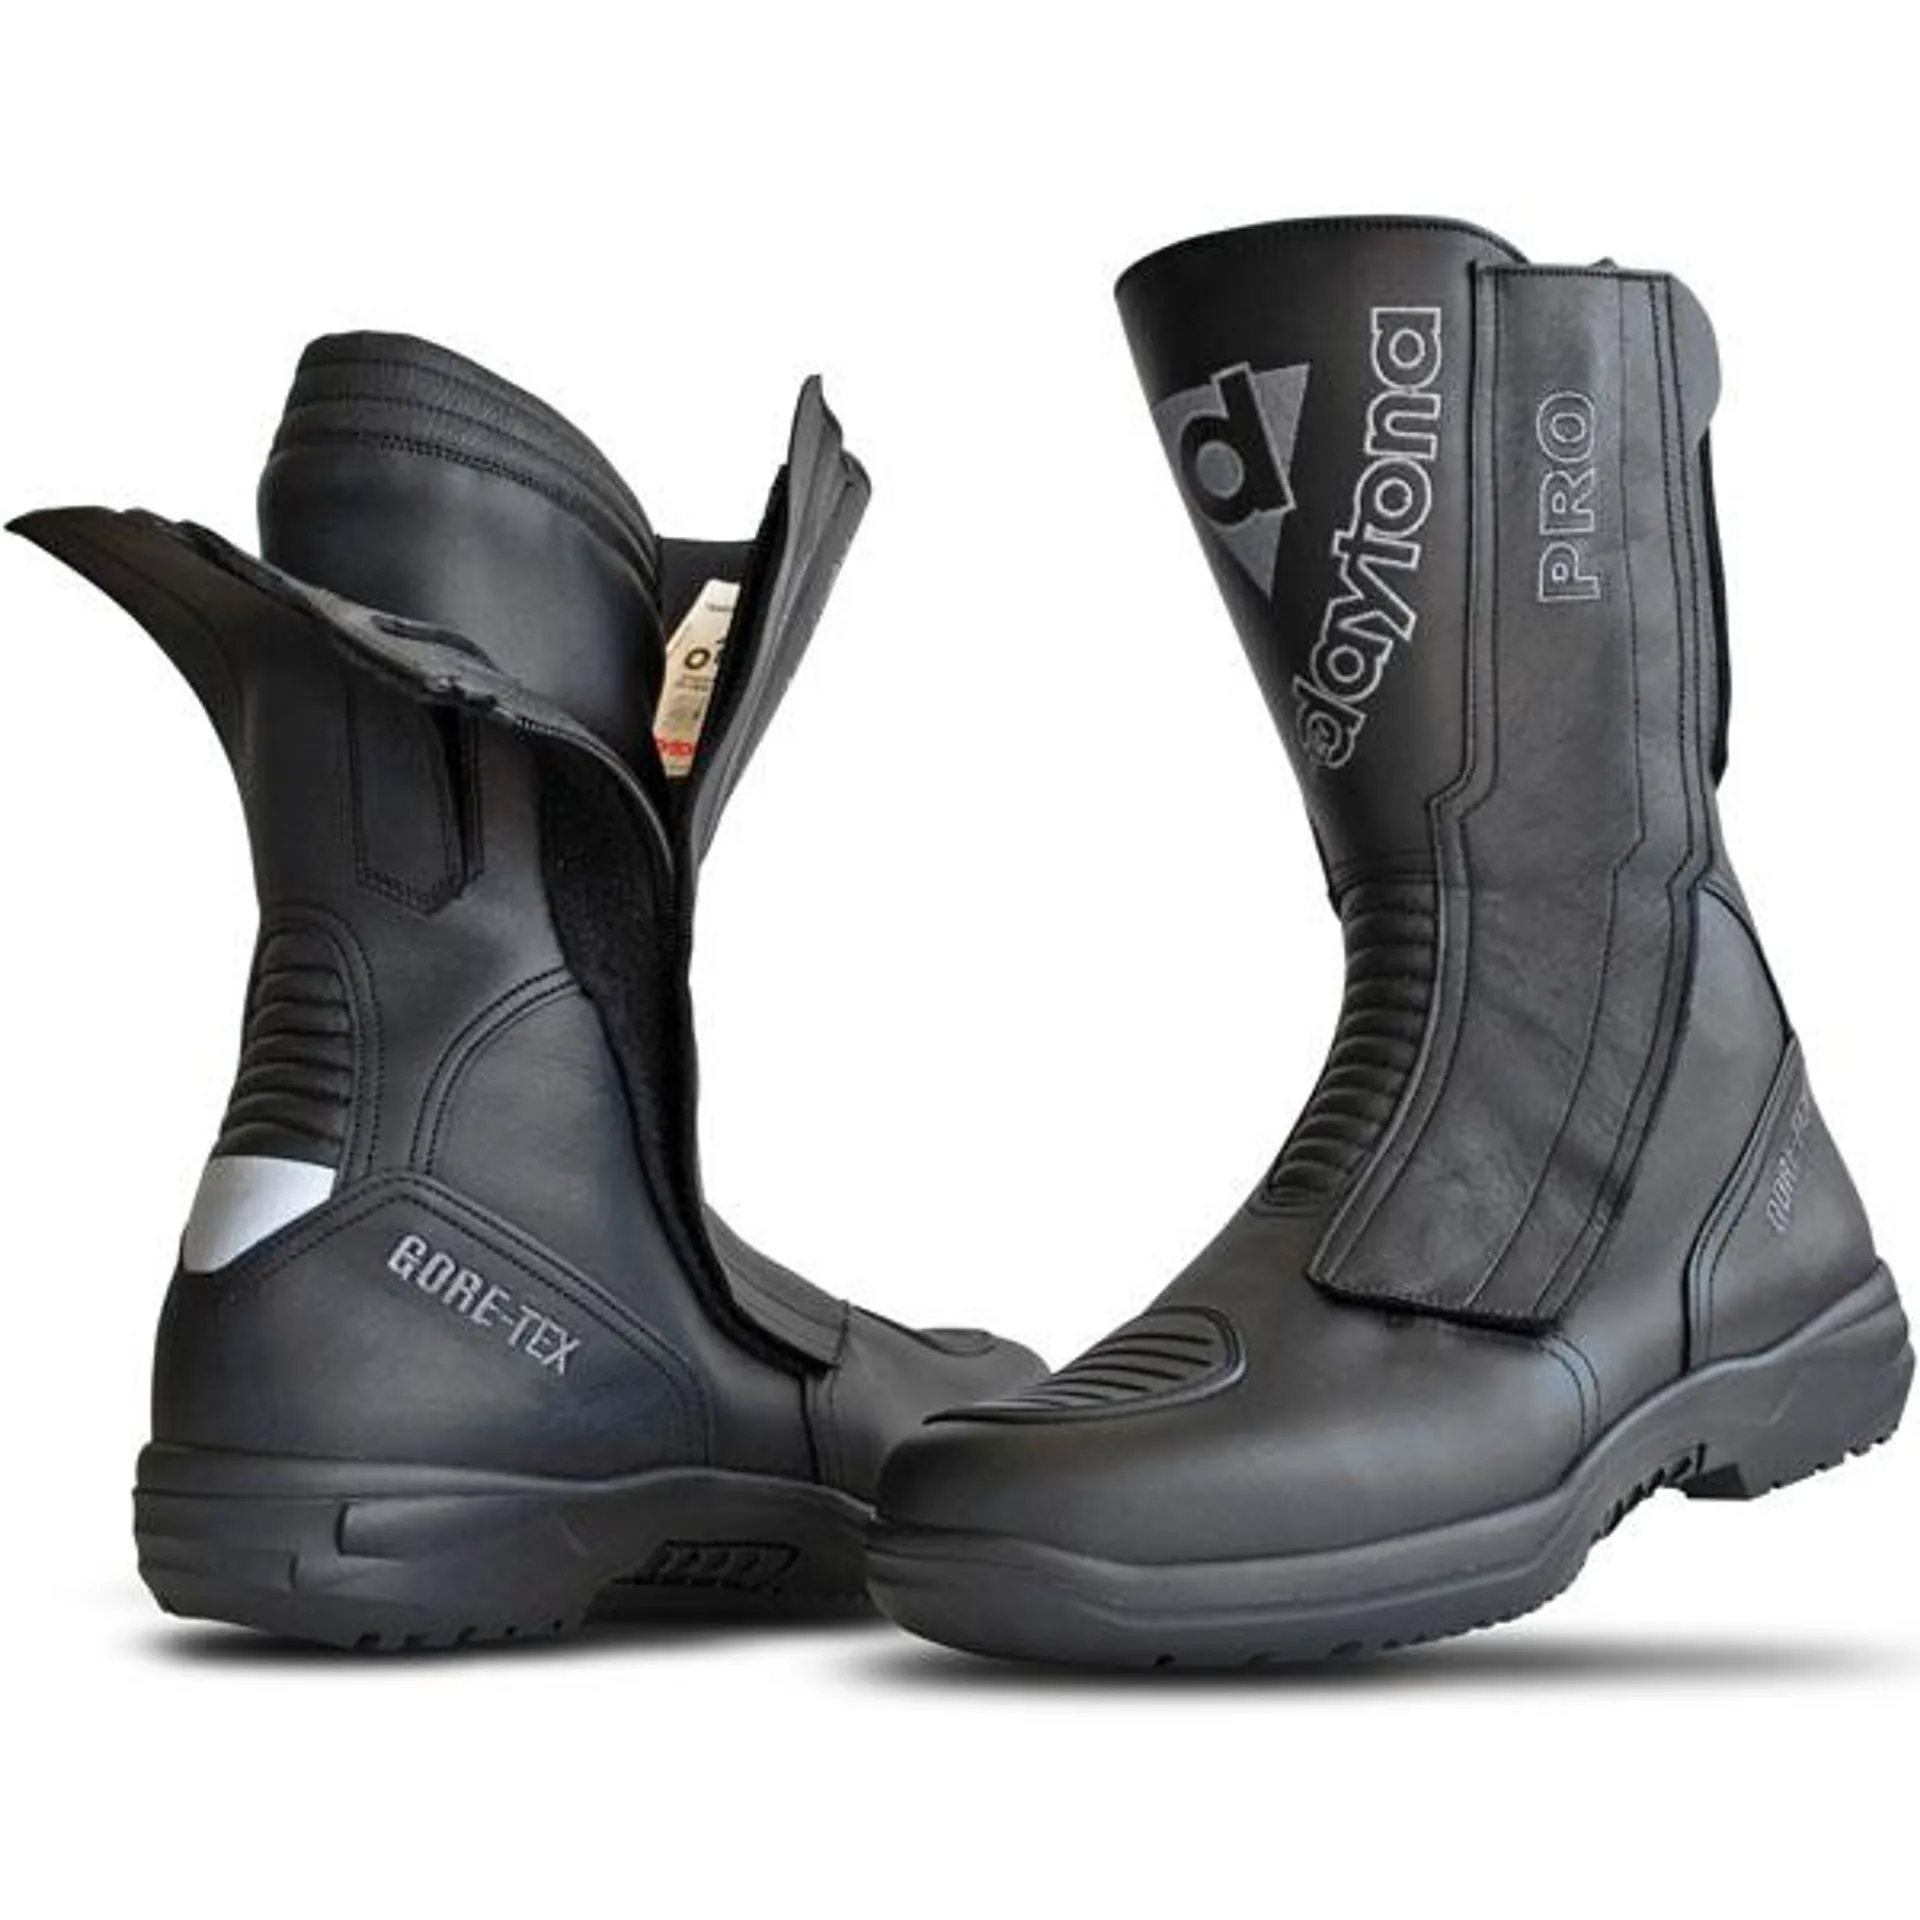 Daytona Travel Star Pro Gore-Tex Boots - Black